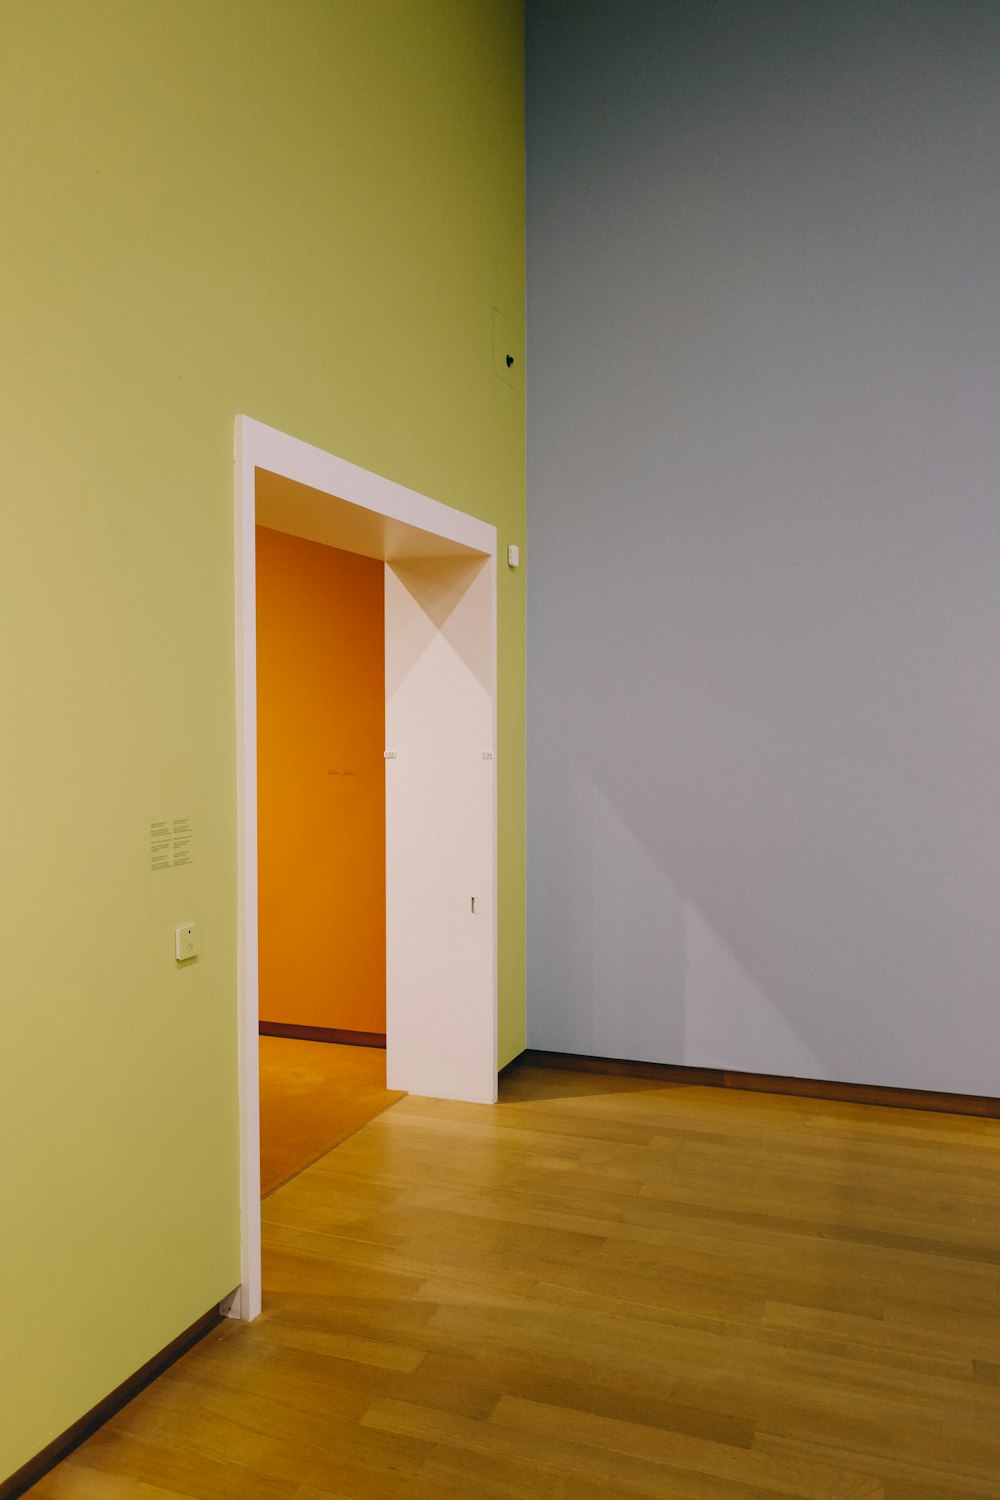 a hallway with a door